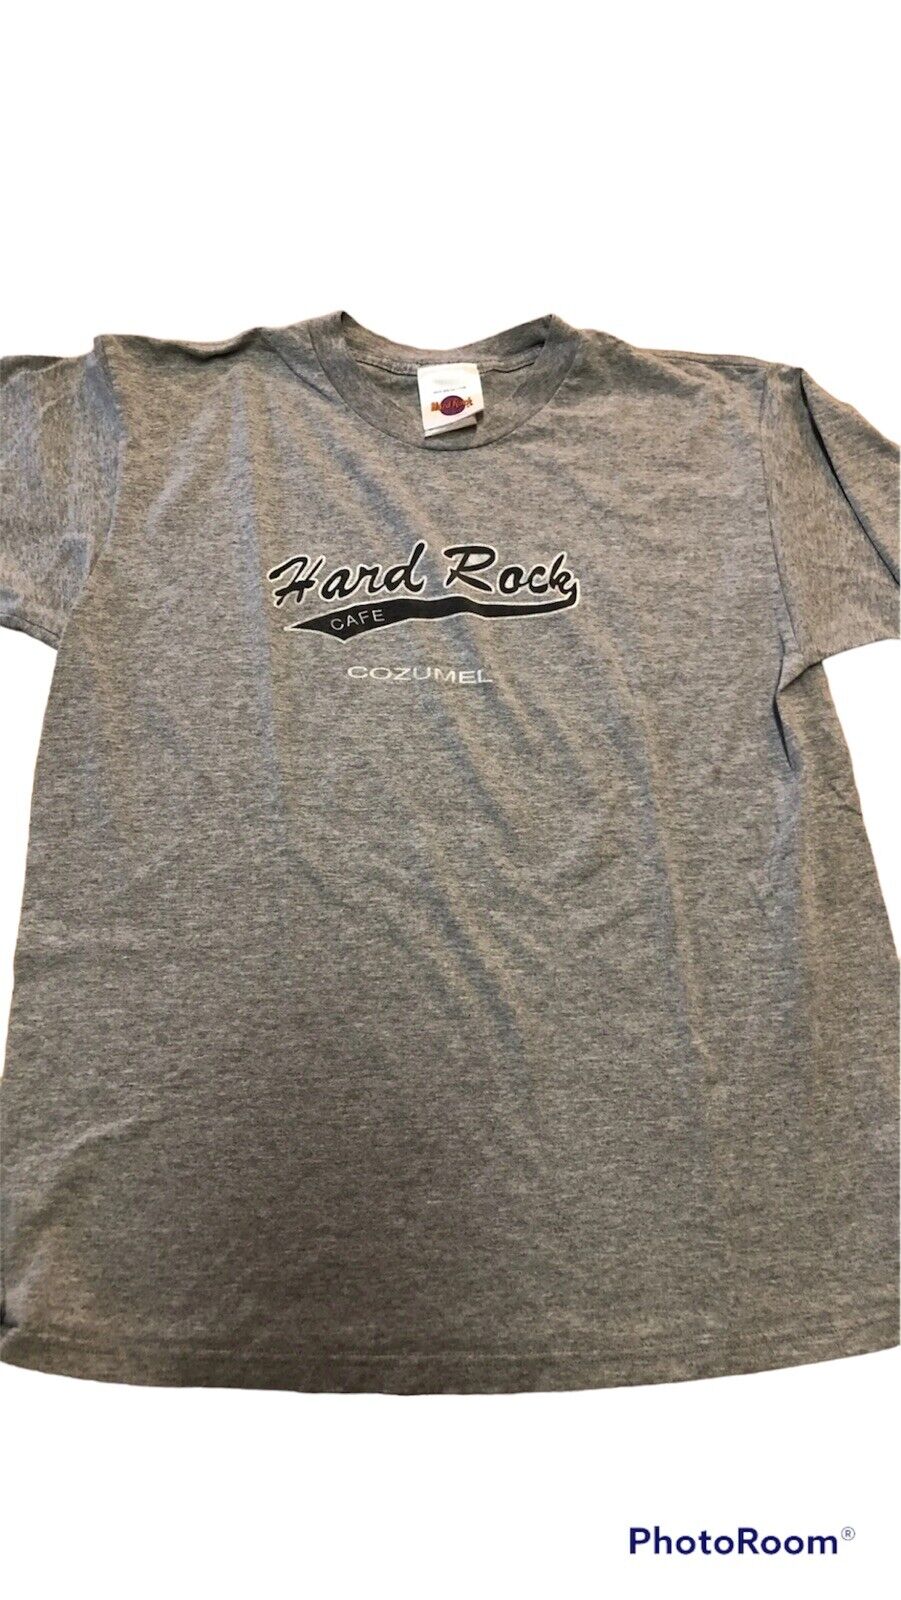 Hard Rock Cozumel tshirt size L Gray